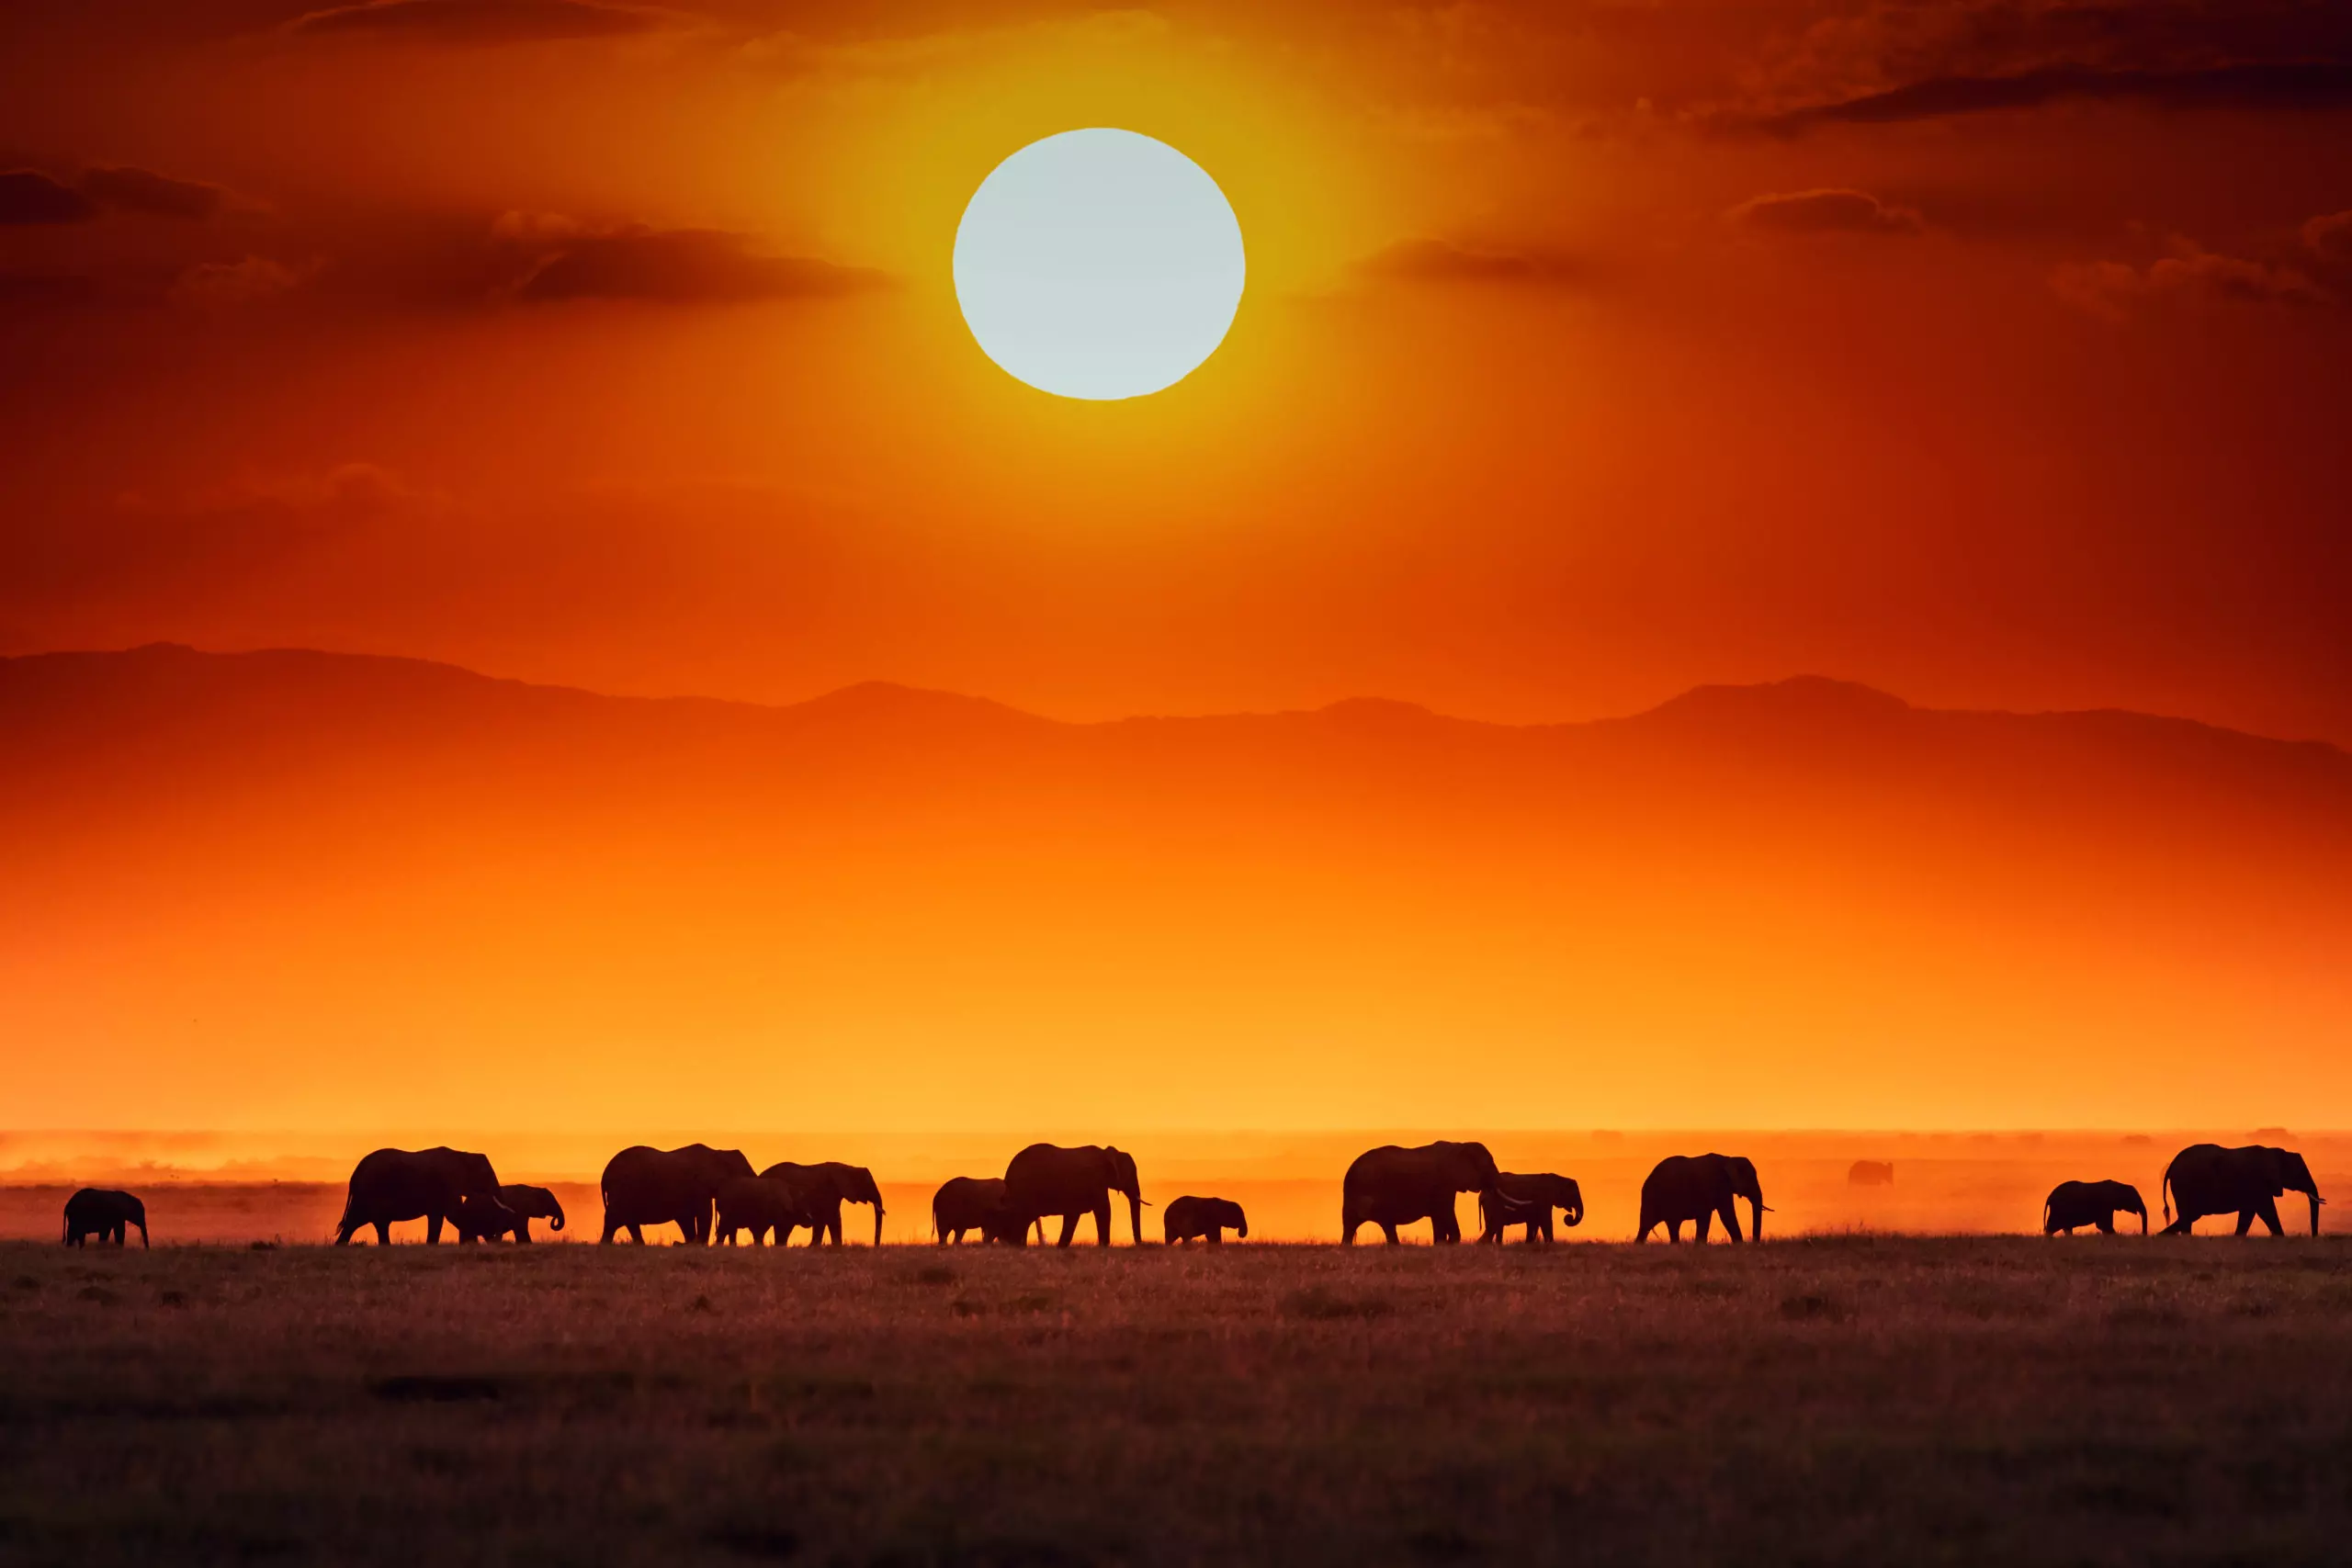 Wandbild (5874) Sunrise parade by Jeffrey C.Sink,1x.com präsentiert: Tiere,Natur,Landschaften,Sommer,Afrika,Berge,Wildtiere,Aus Afrika